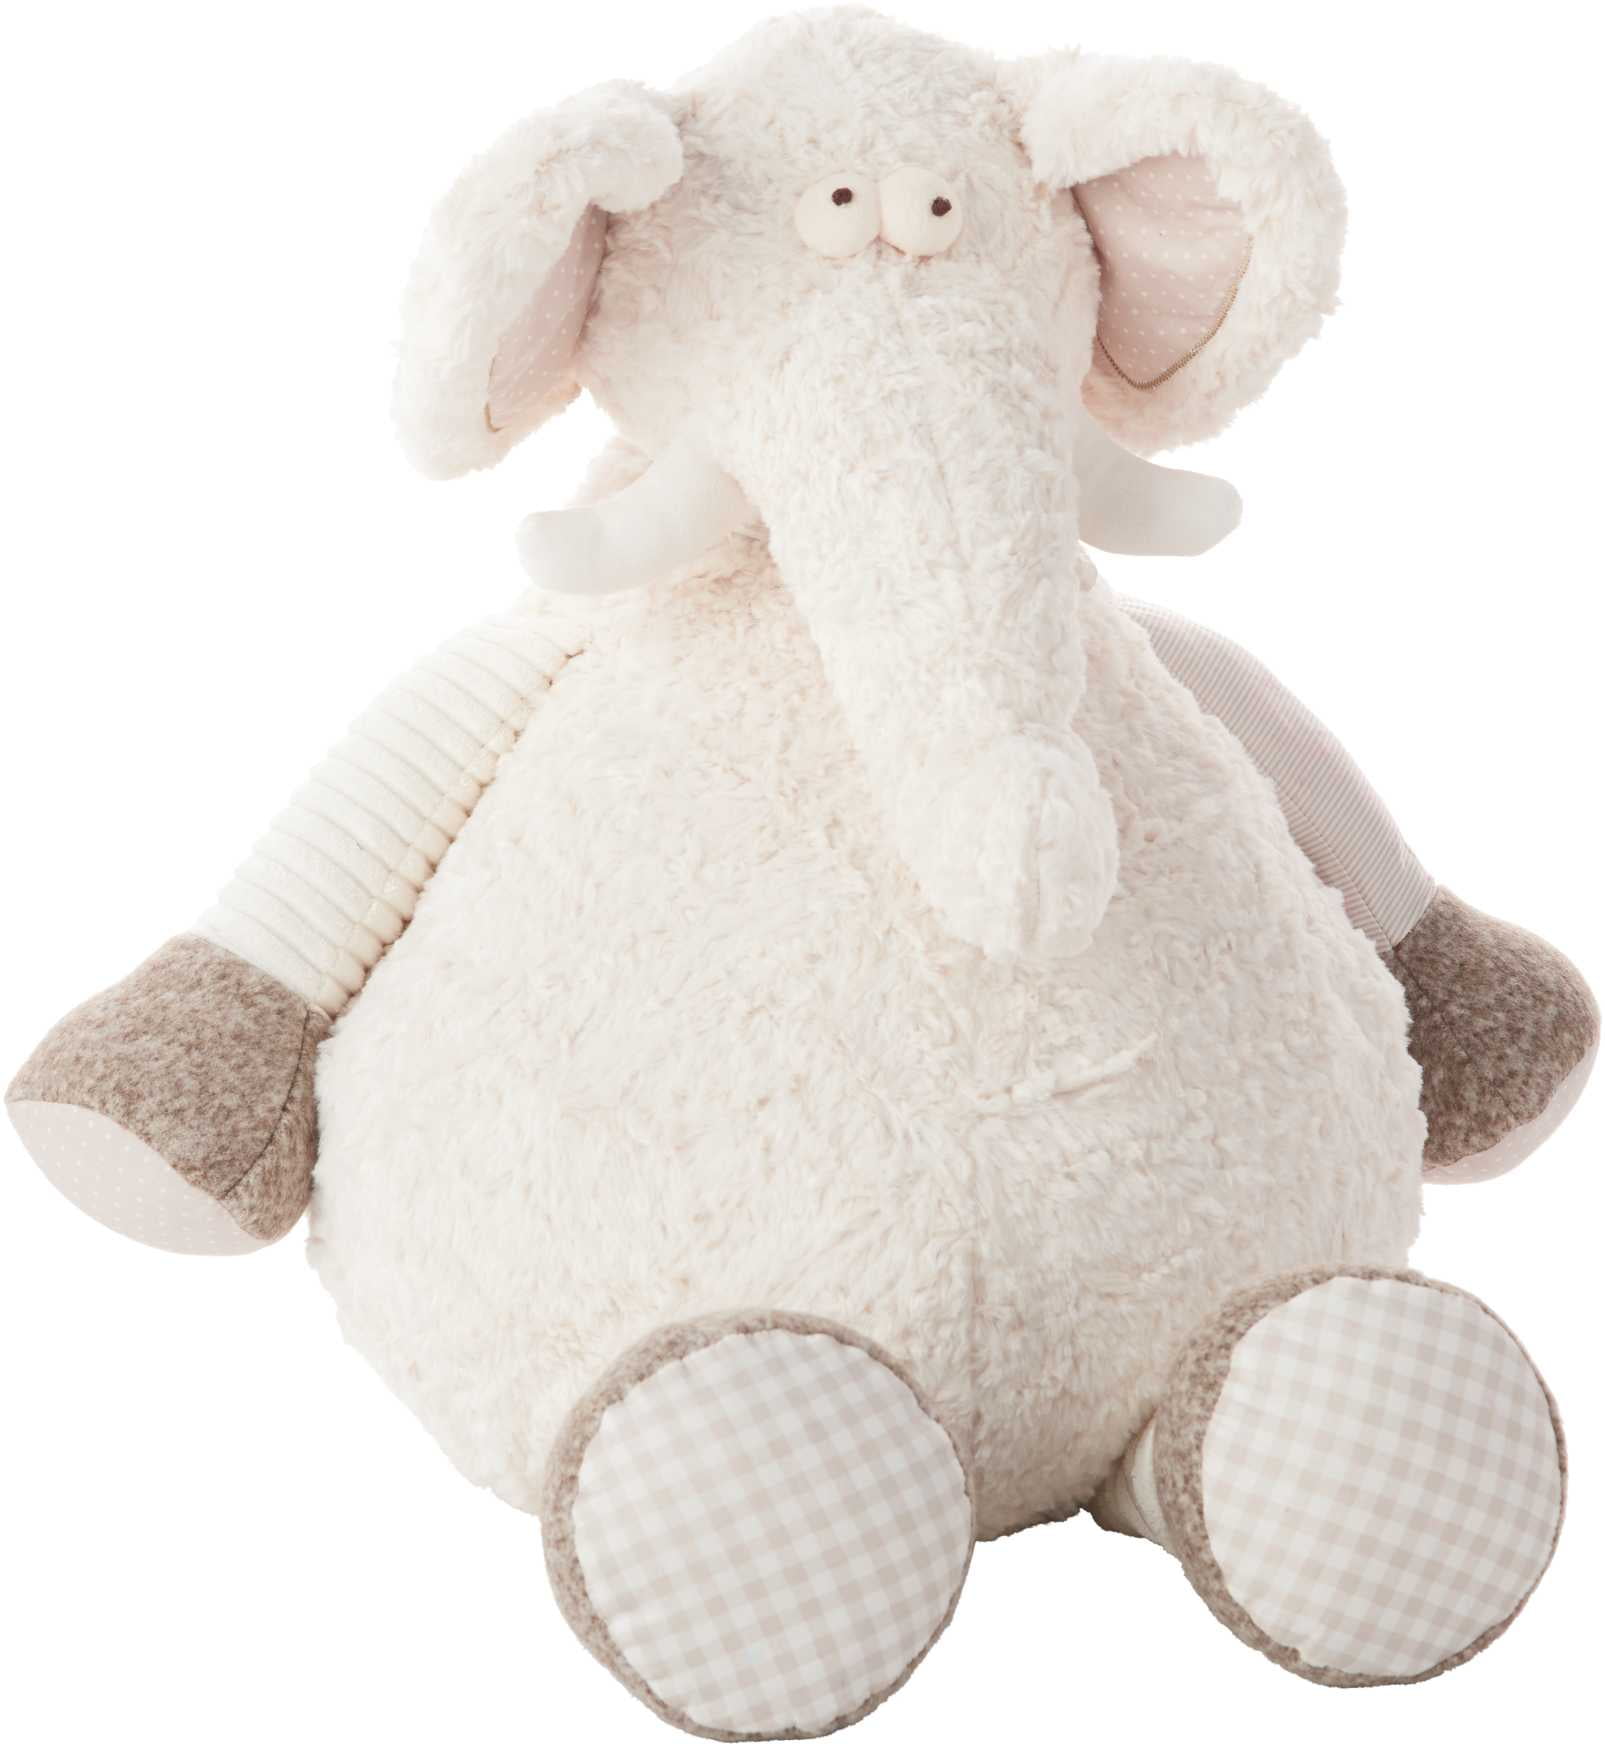 snuggle elephant pillow